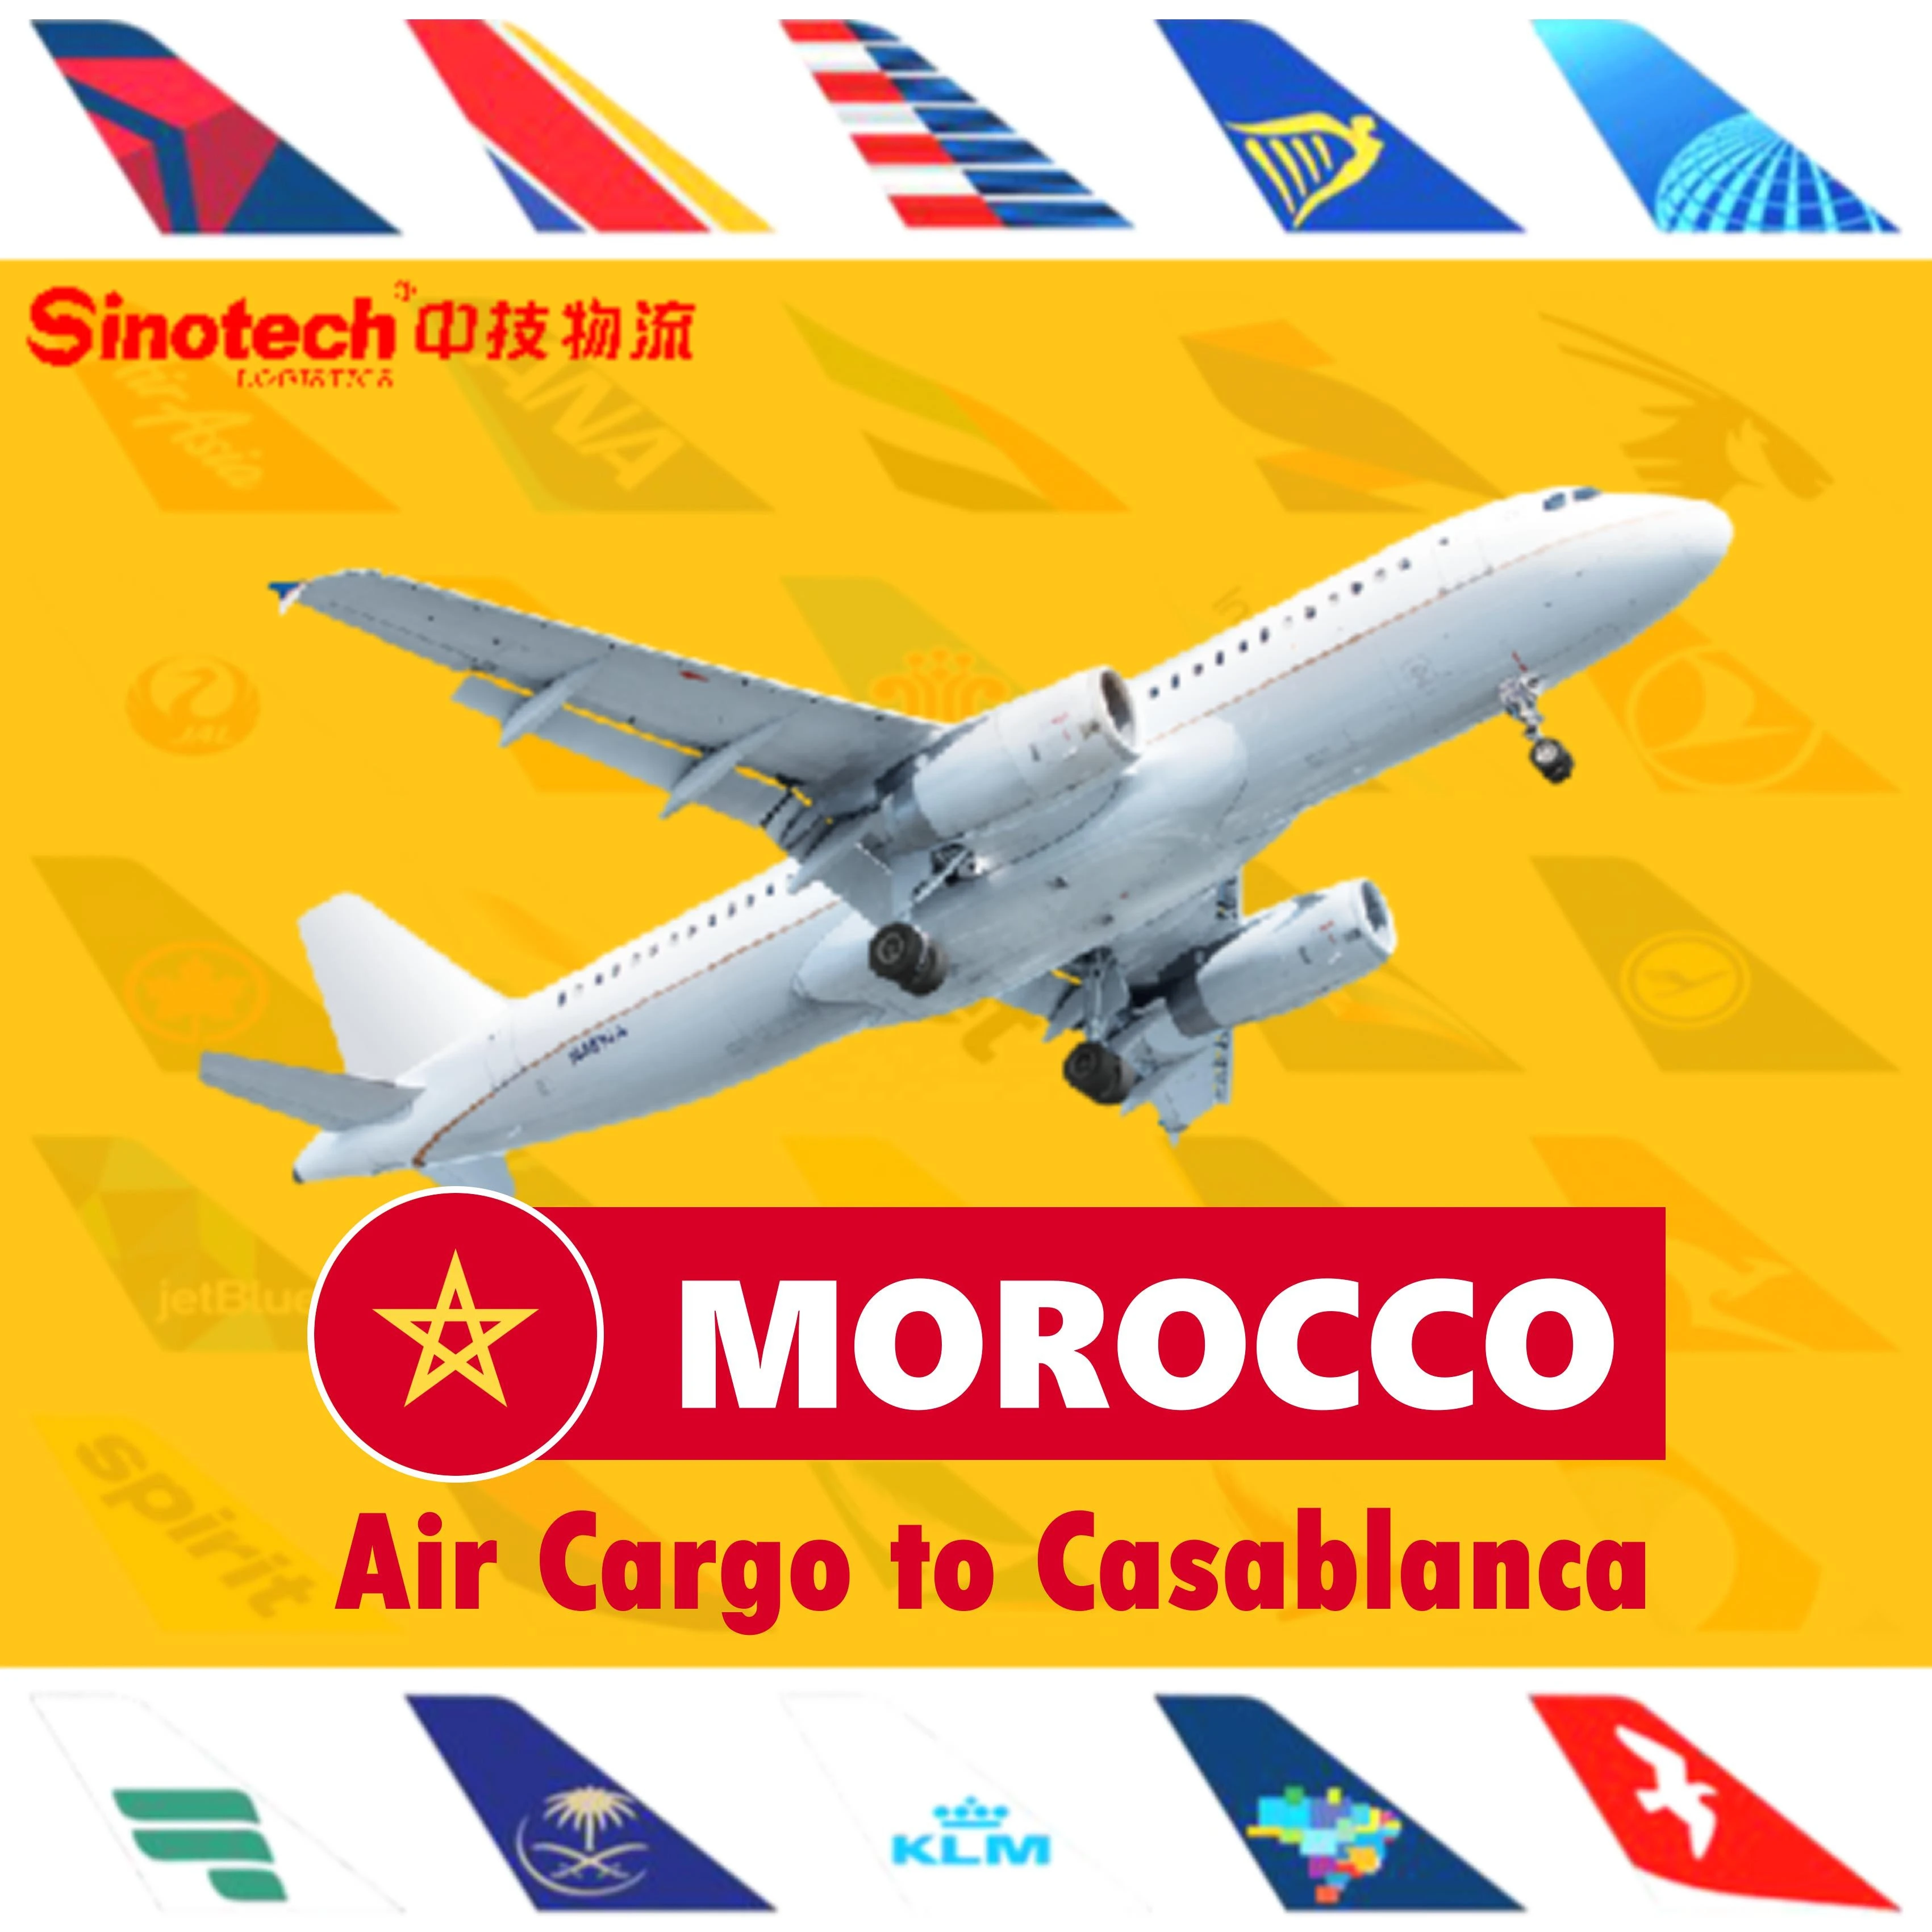 China air shipping freight forwarder air cargo to Casablanca Morocco